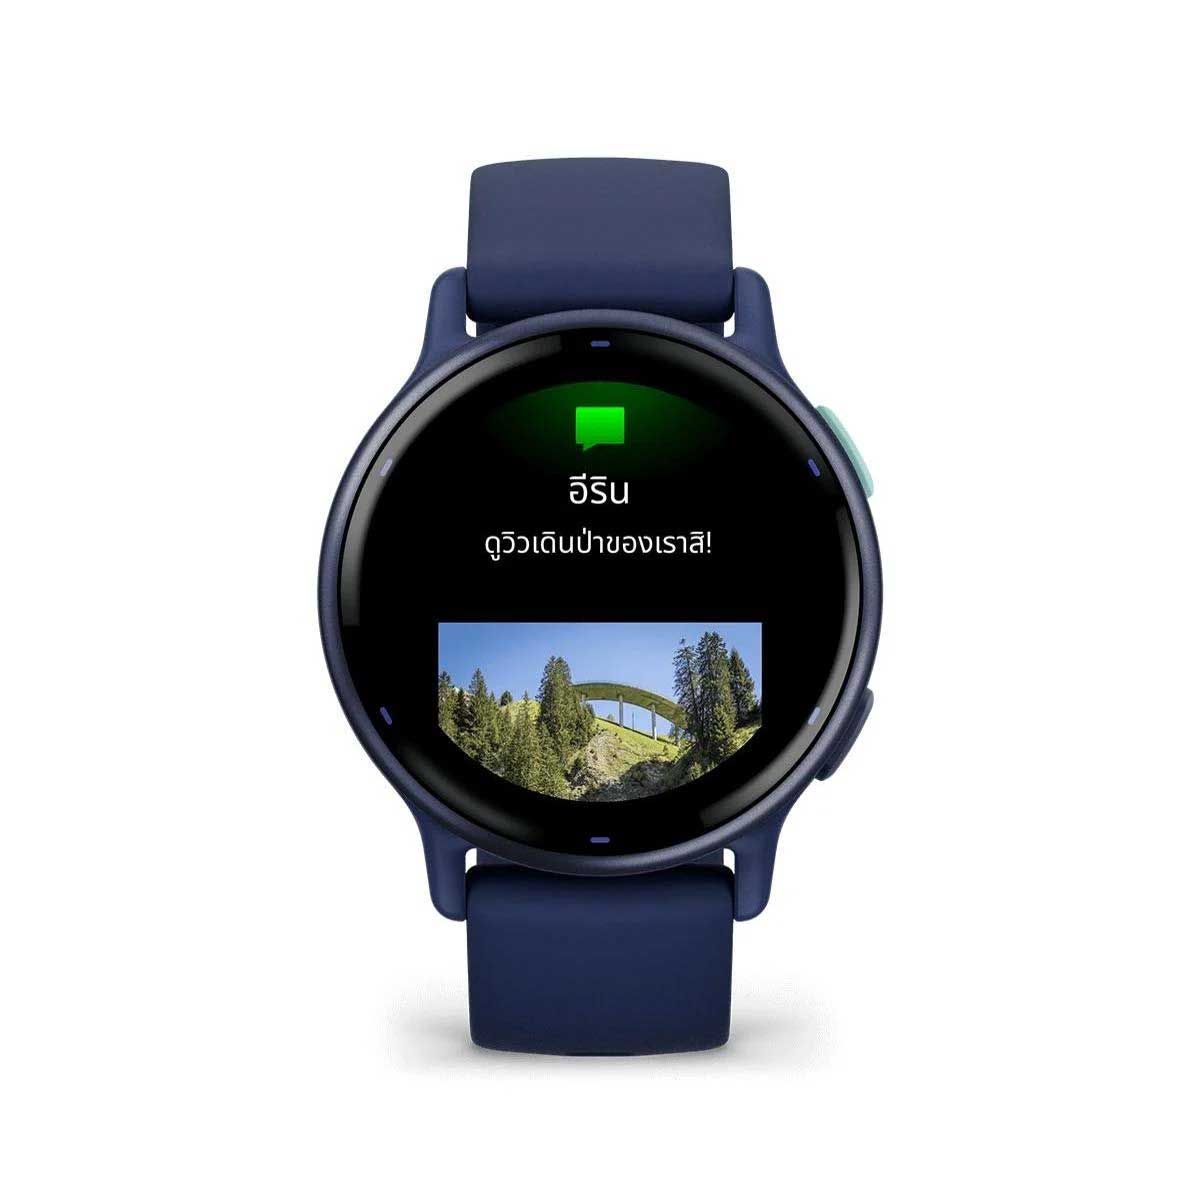 GARMIN Smart Watch รุ่น vivoactive 5 Navy